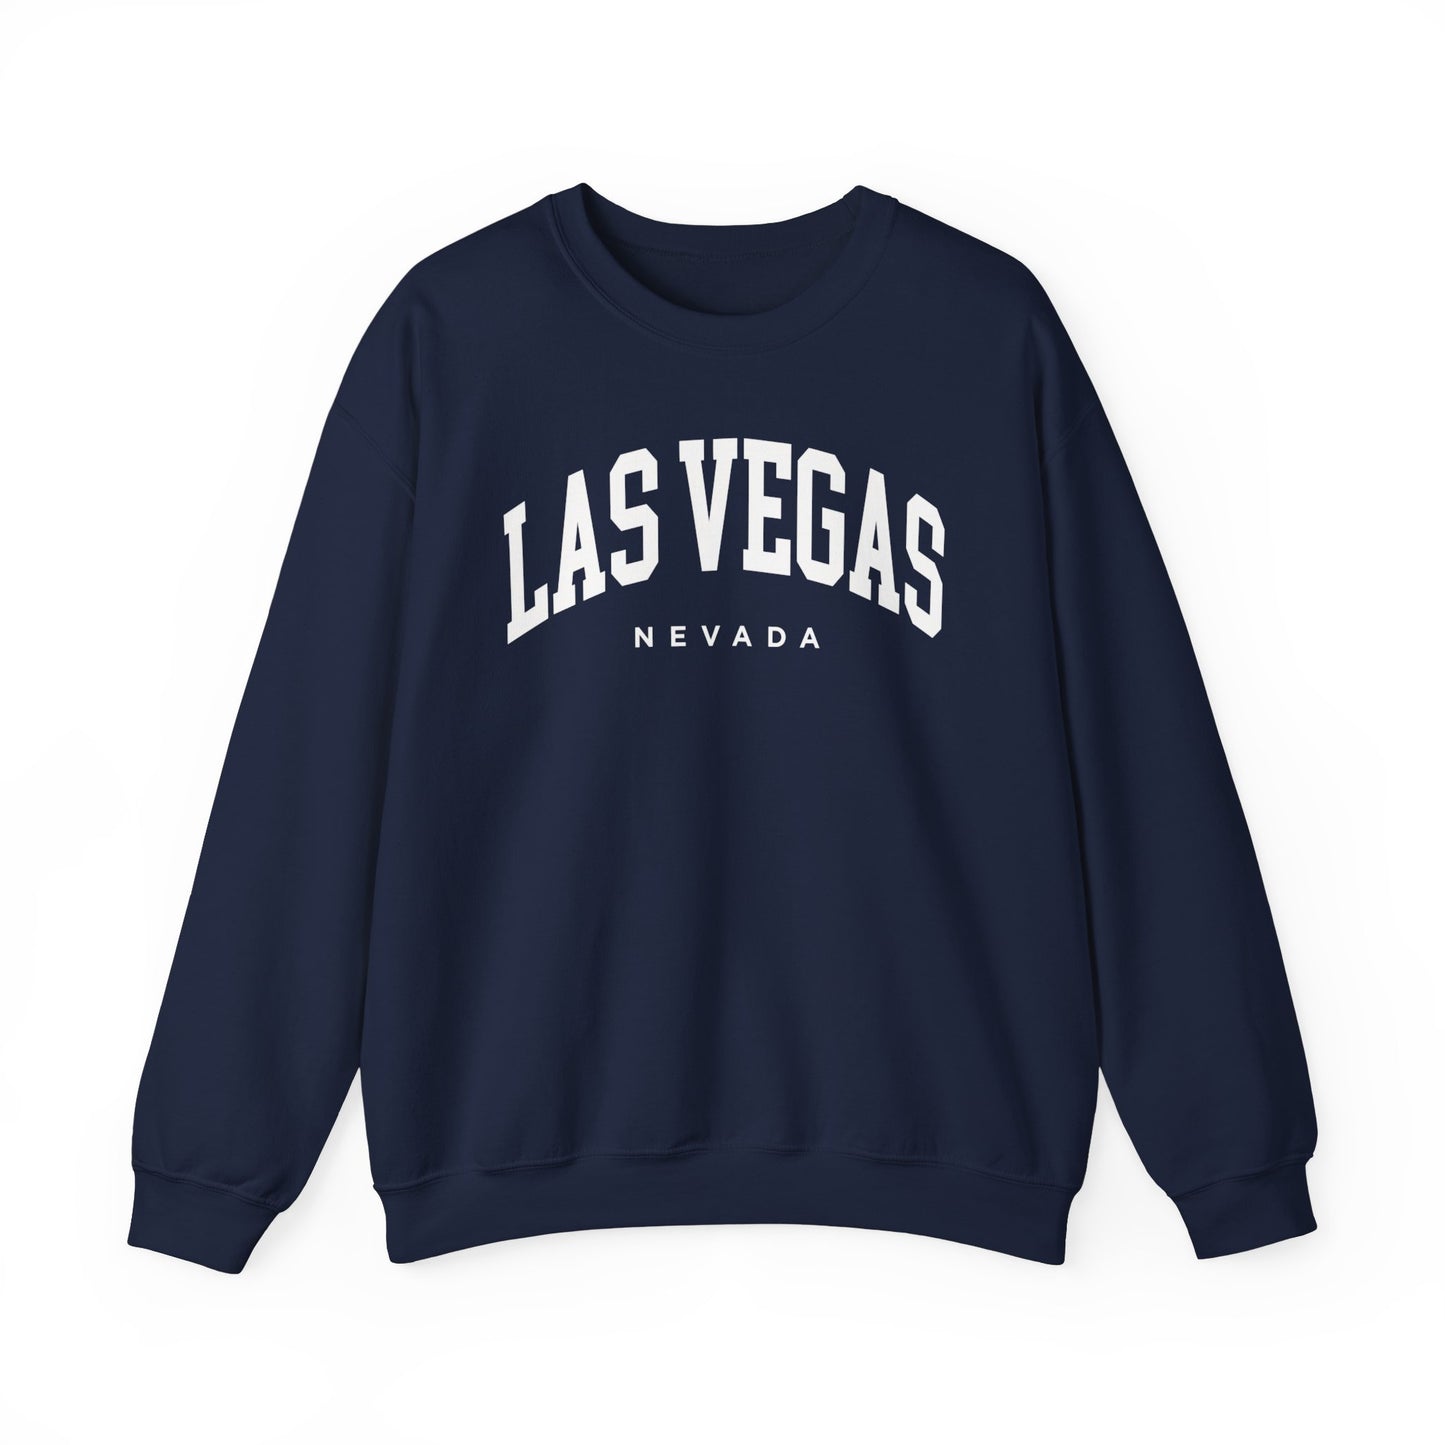 Las Vegas Nevada Sweatshirt